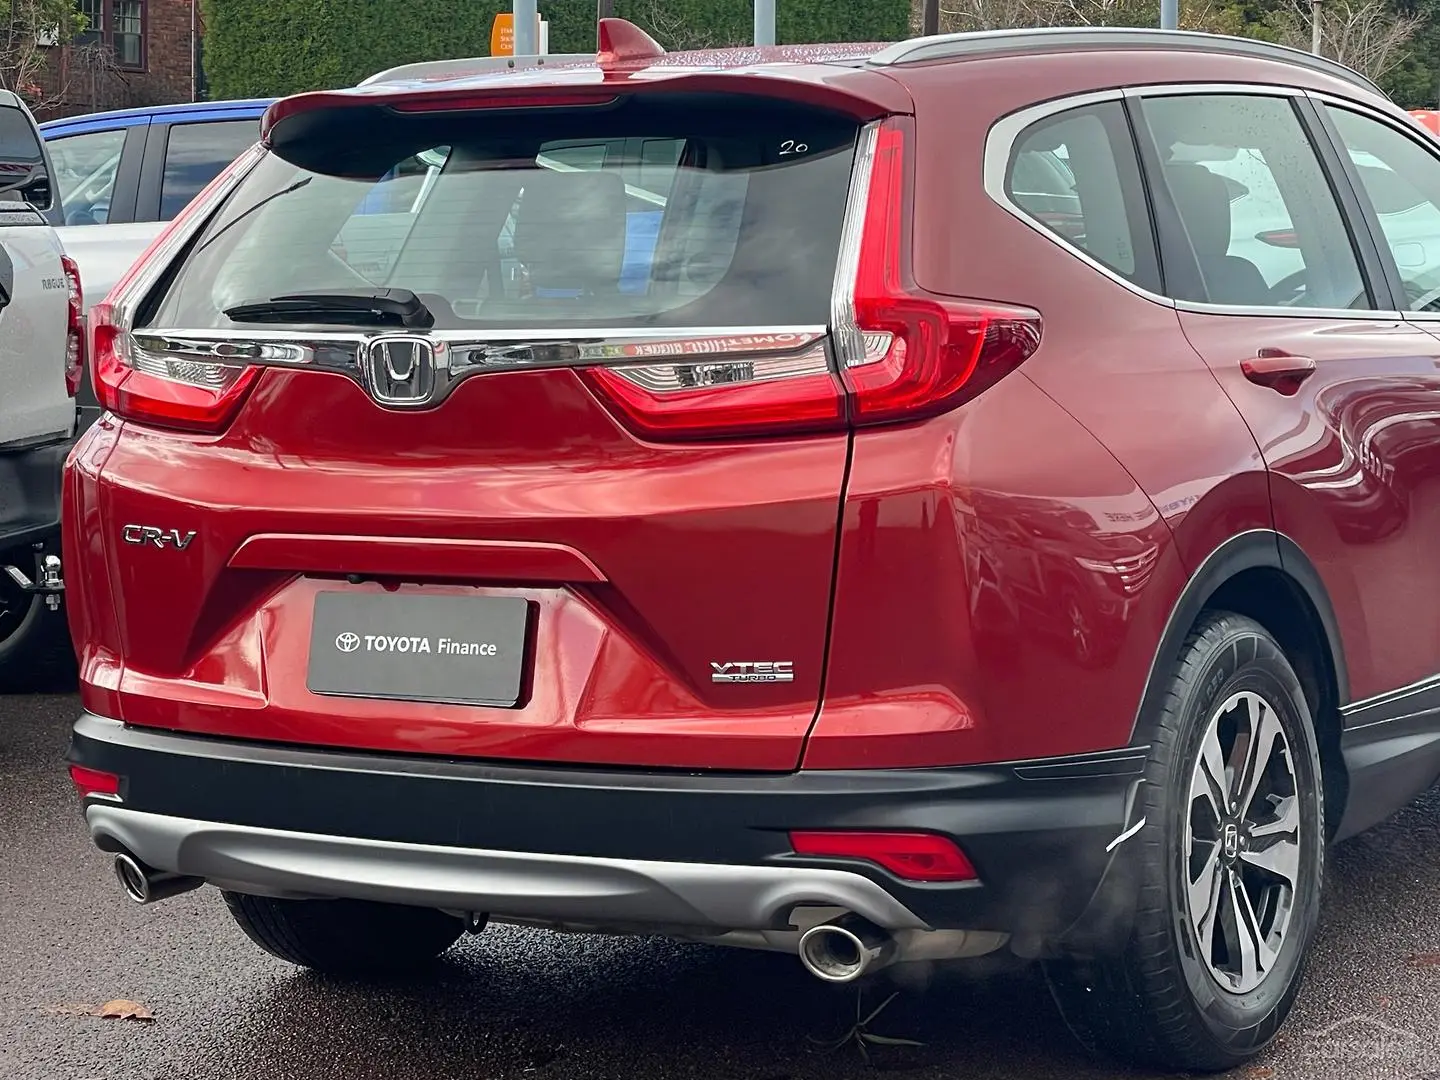 2019 Honda CR-V Image 5